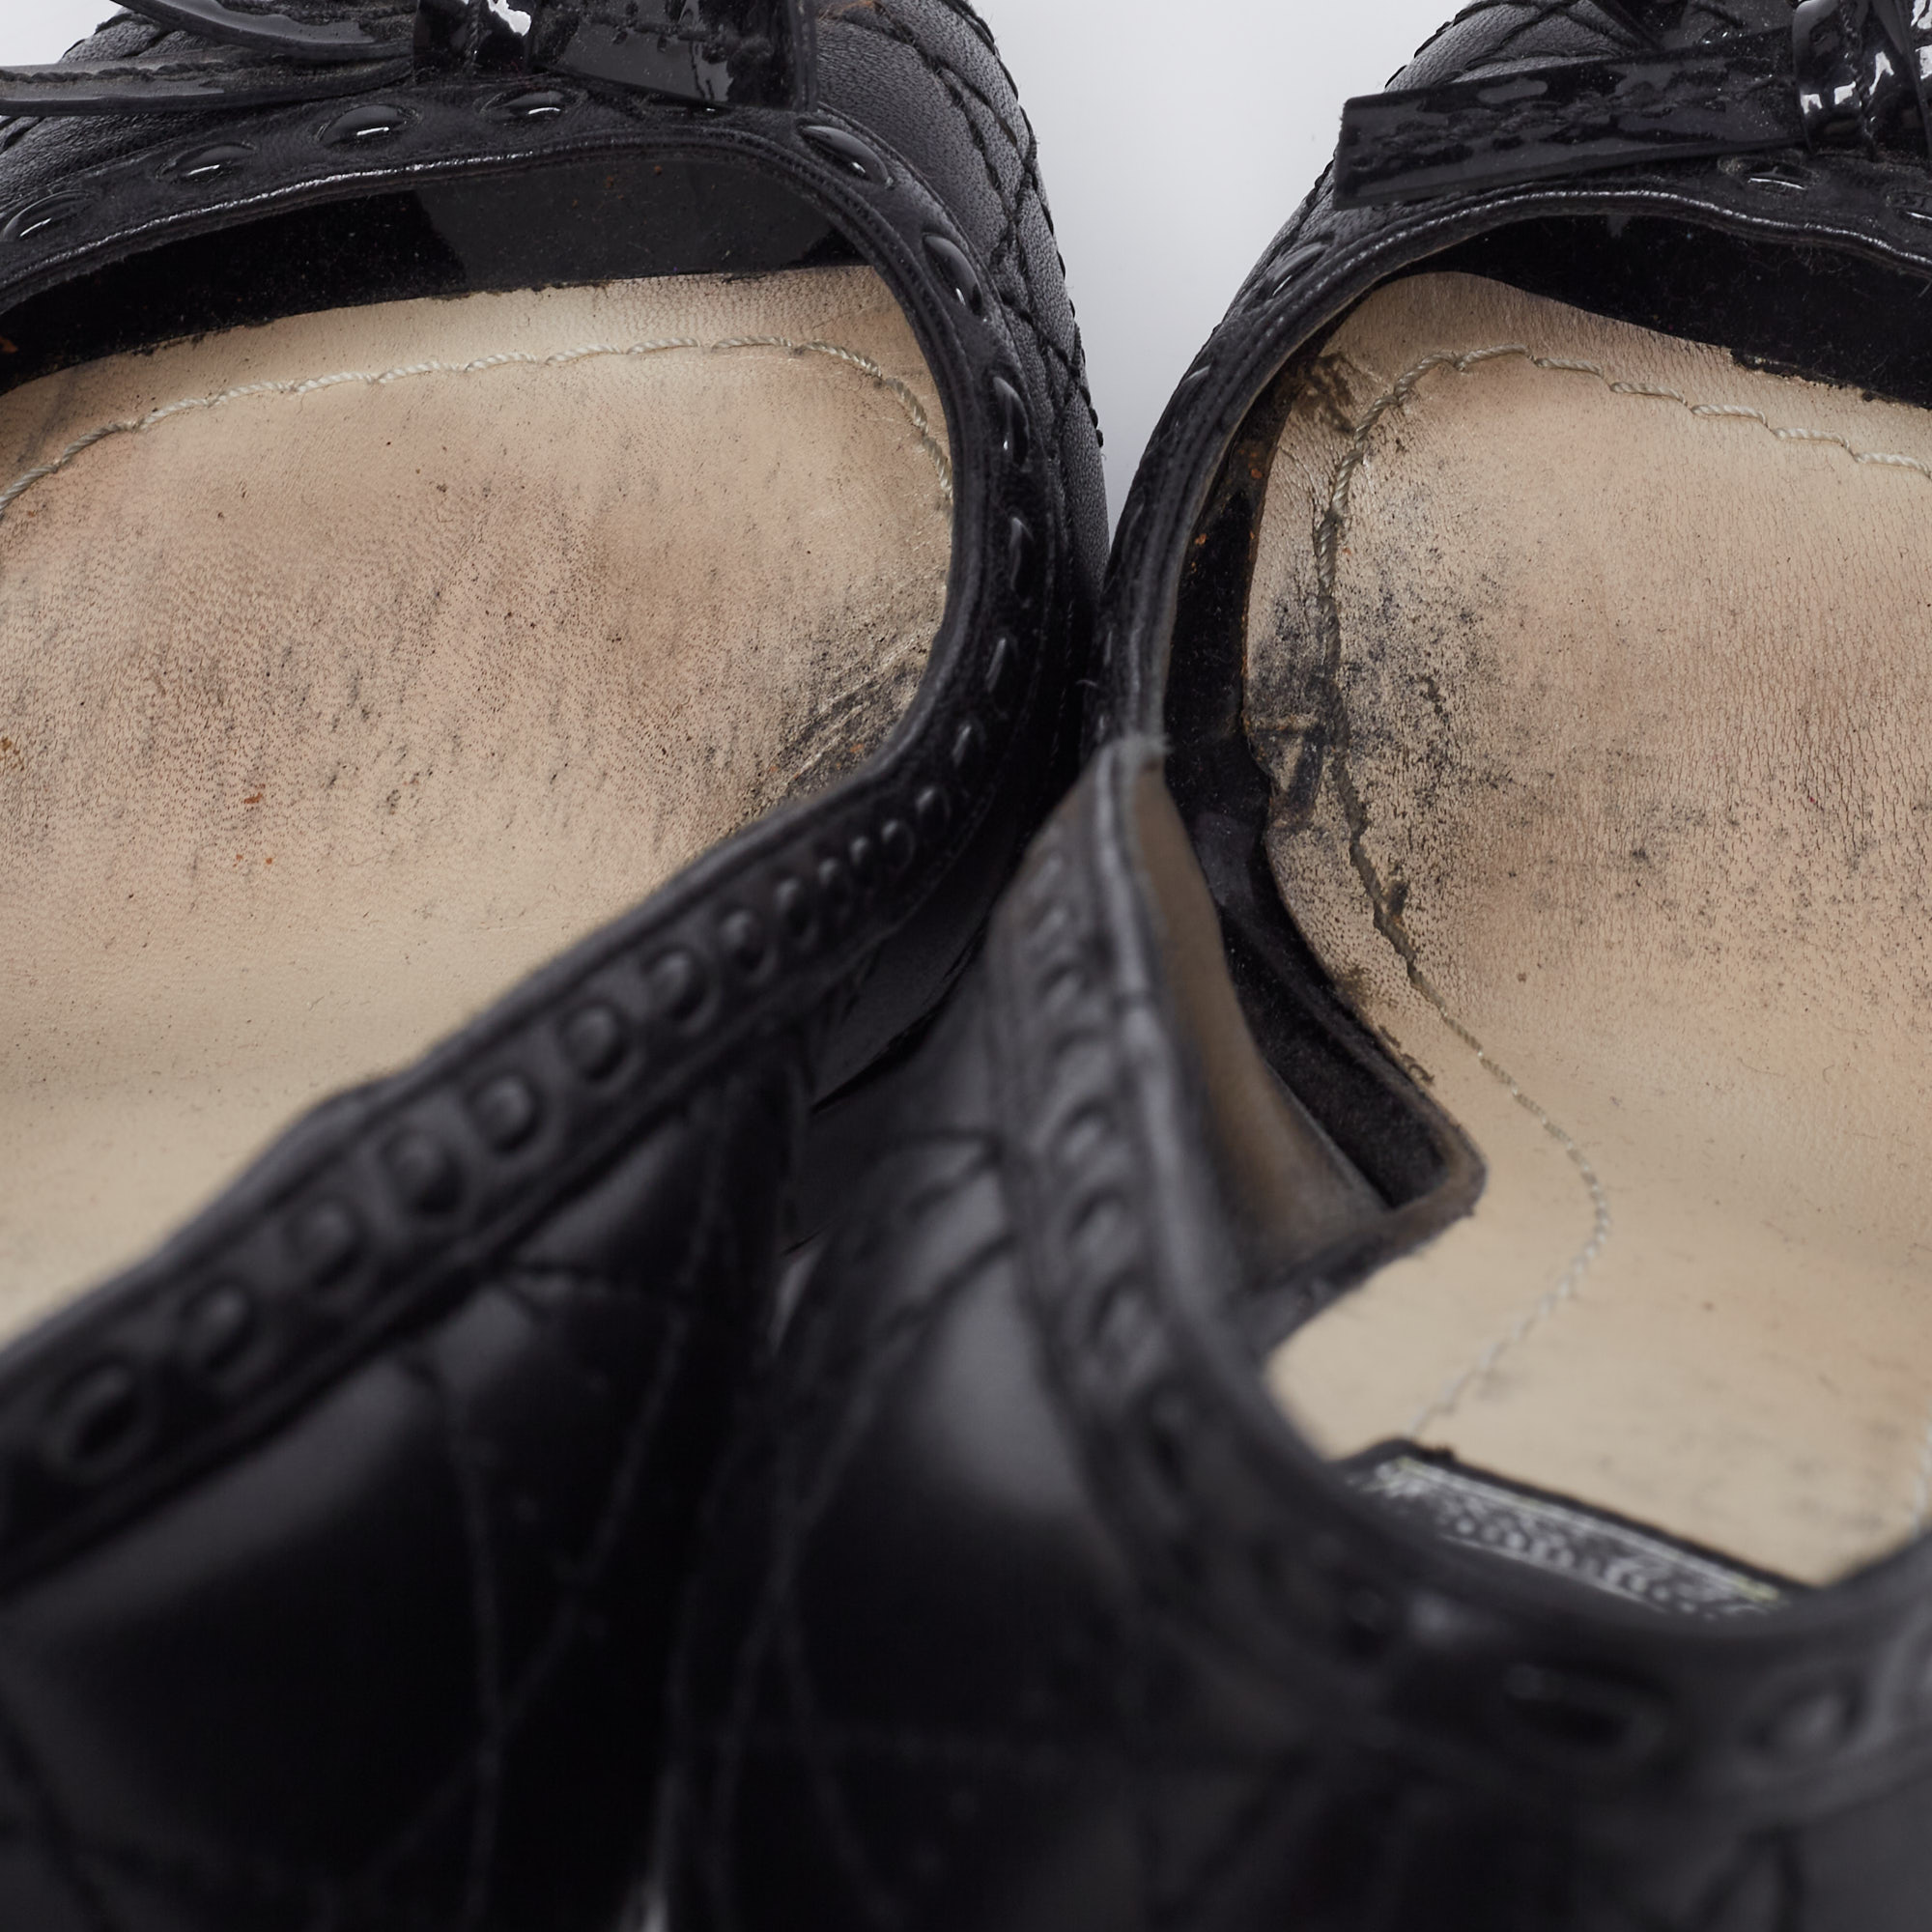 Dior Black Cannage Leather Bow Peep-Toe Pumps Size 37